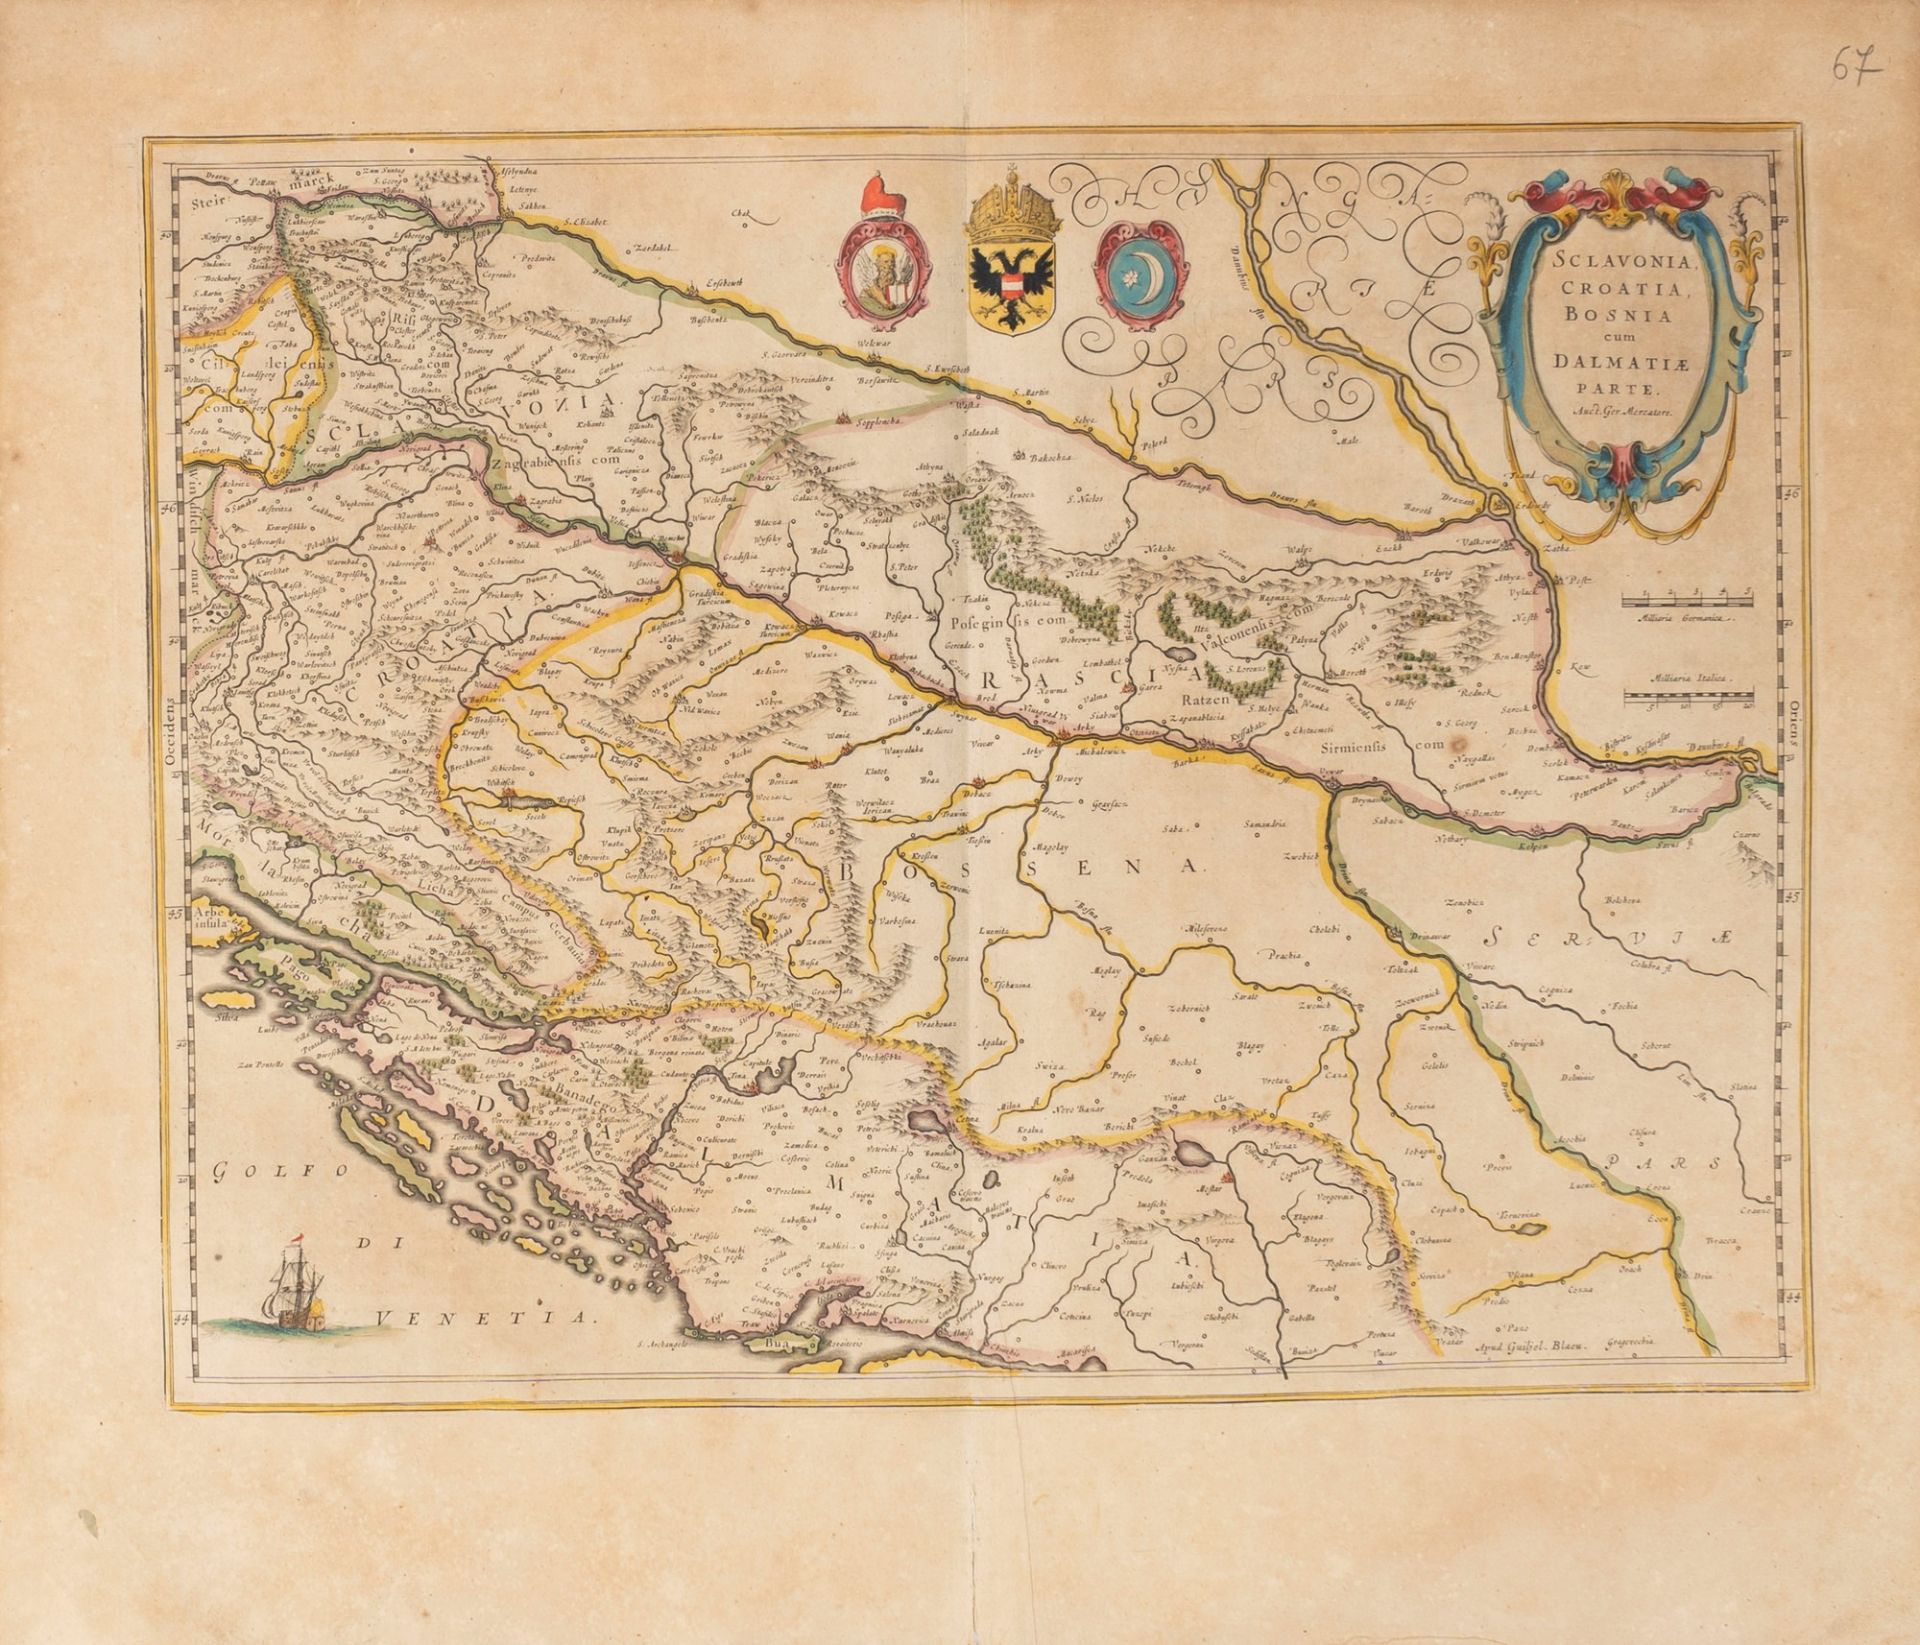 Balkans - Mercatore, Gerardo - Sclavonia, Croatia, Bosnia cum Dalmatiae Part. Auct. Ger. Mercator.